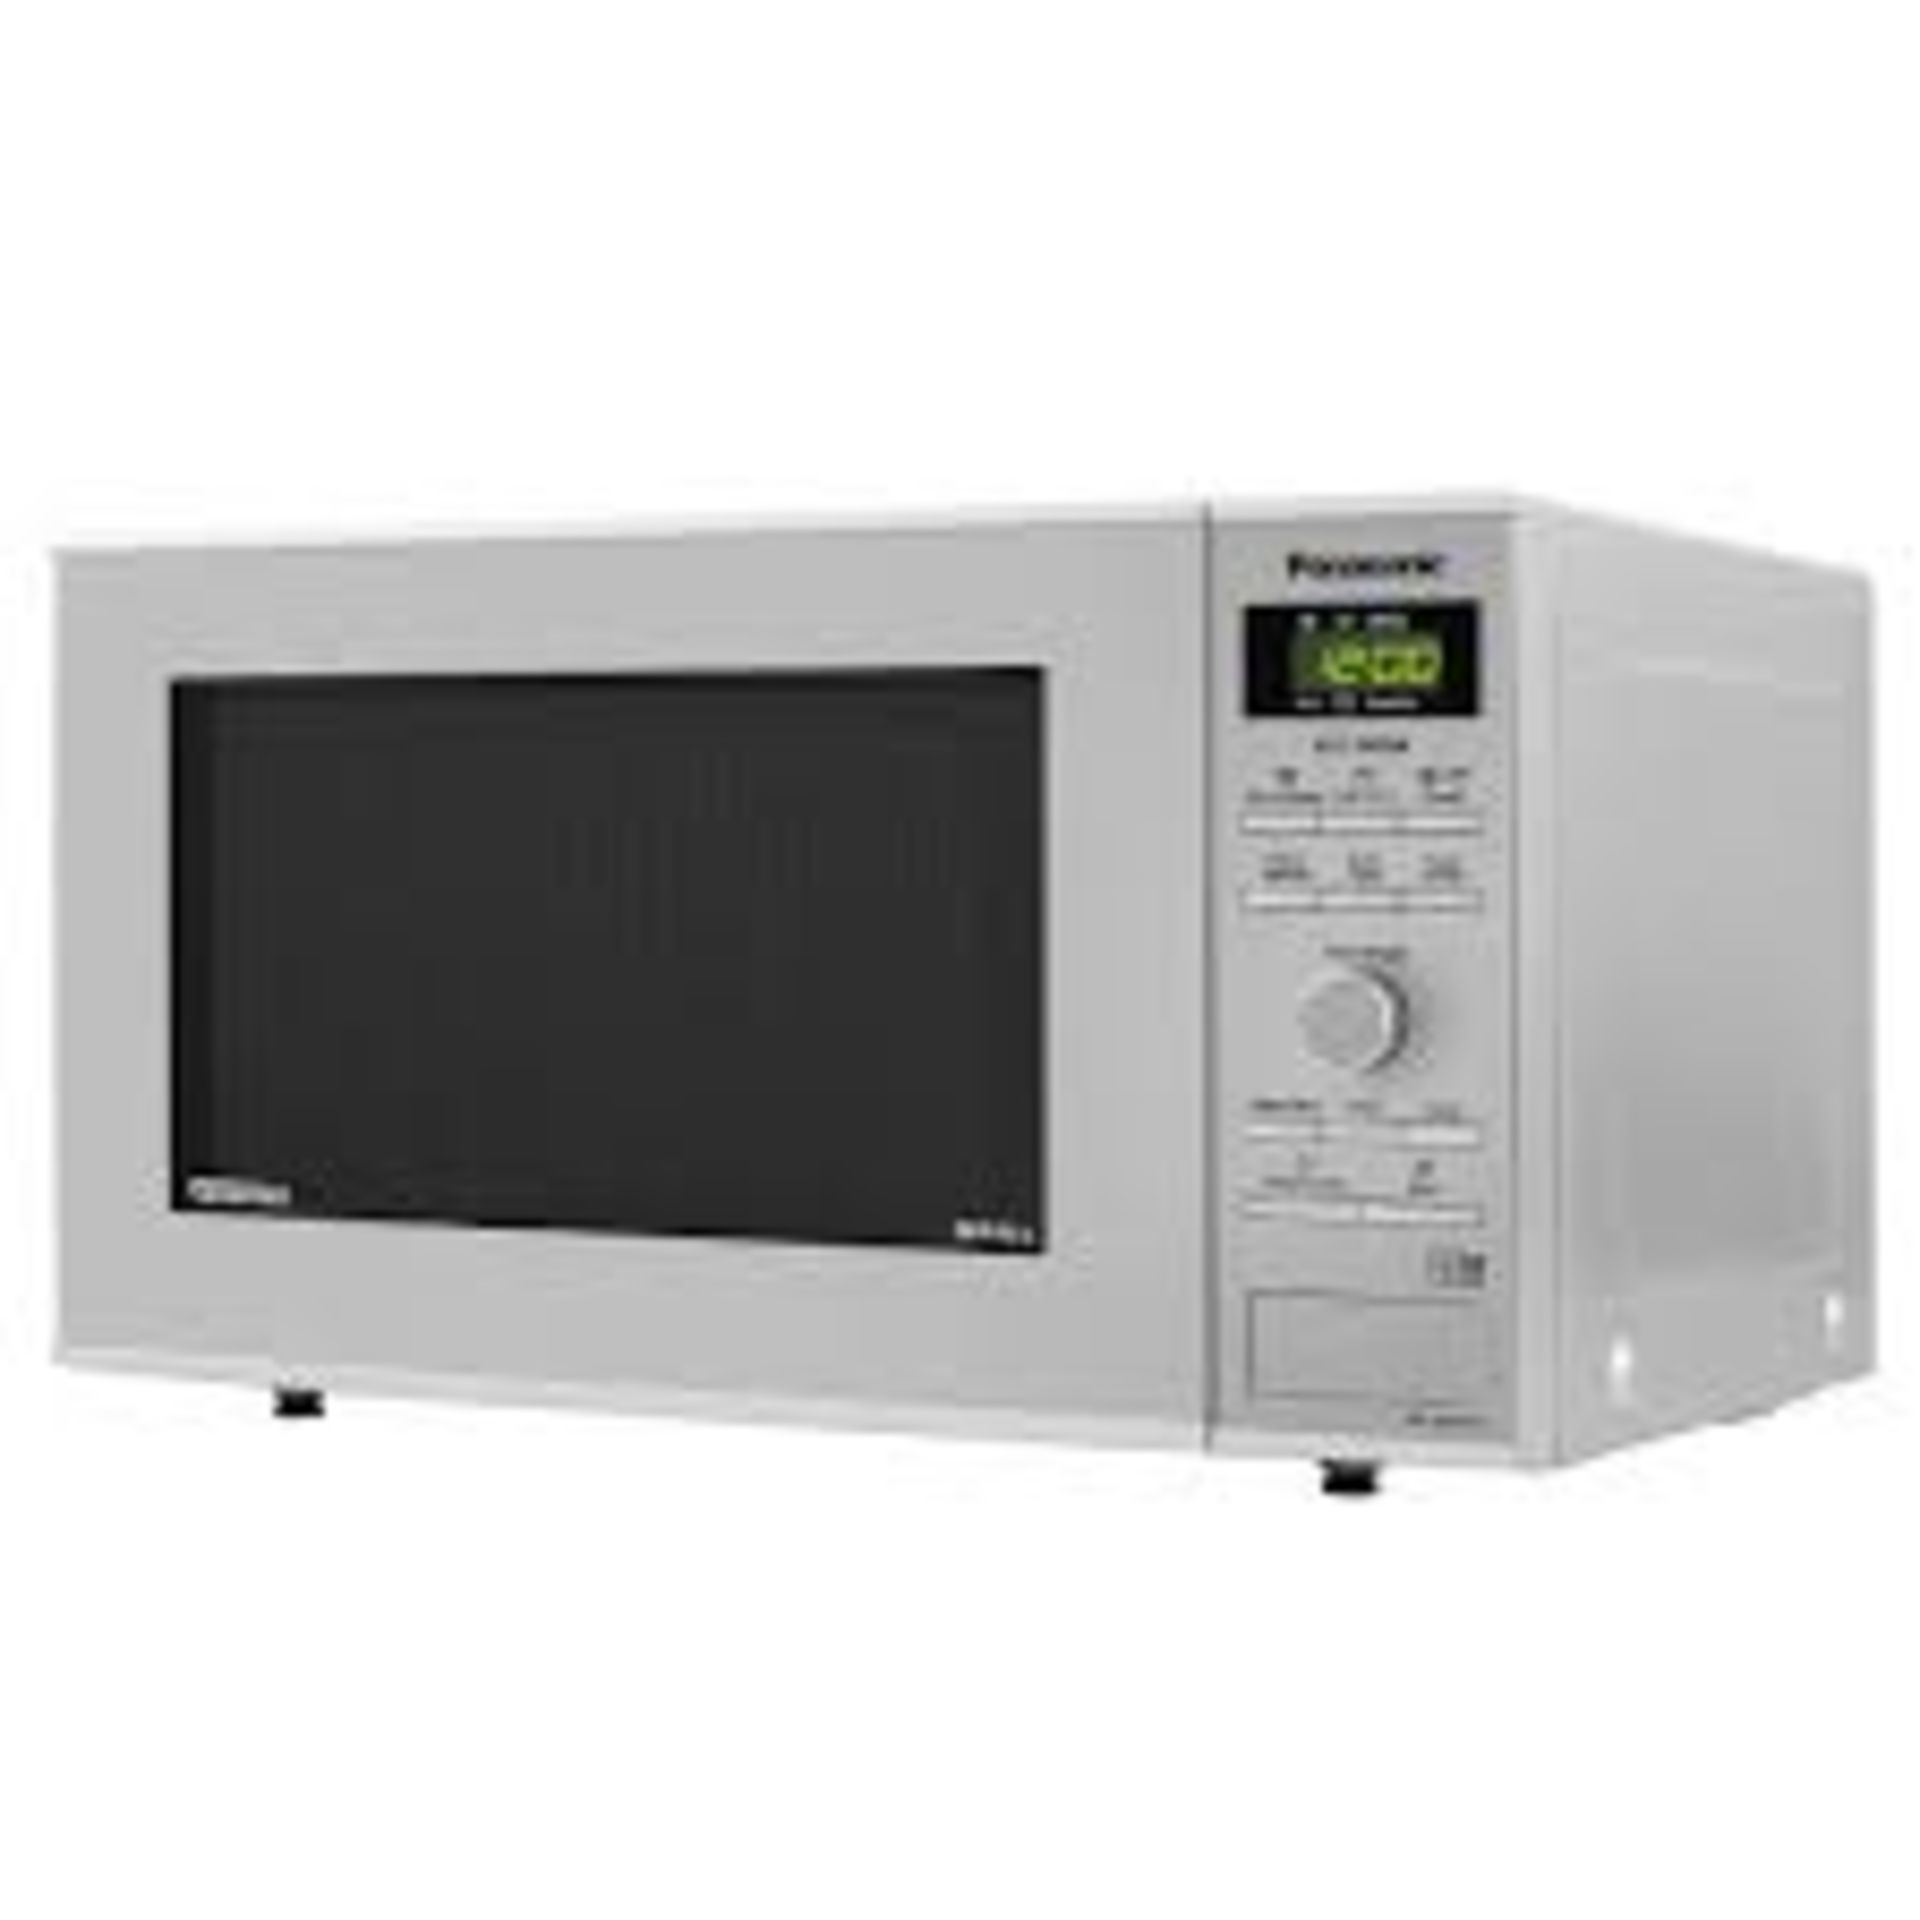 (REF118301) Panasonic 1000W 23Litre Microwave RRP 404.99